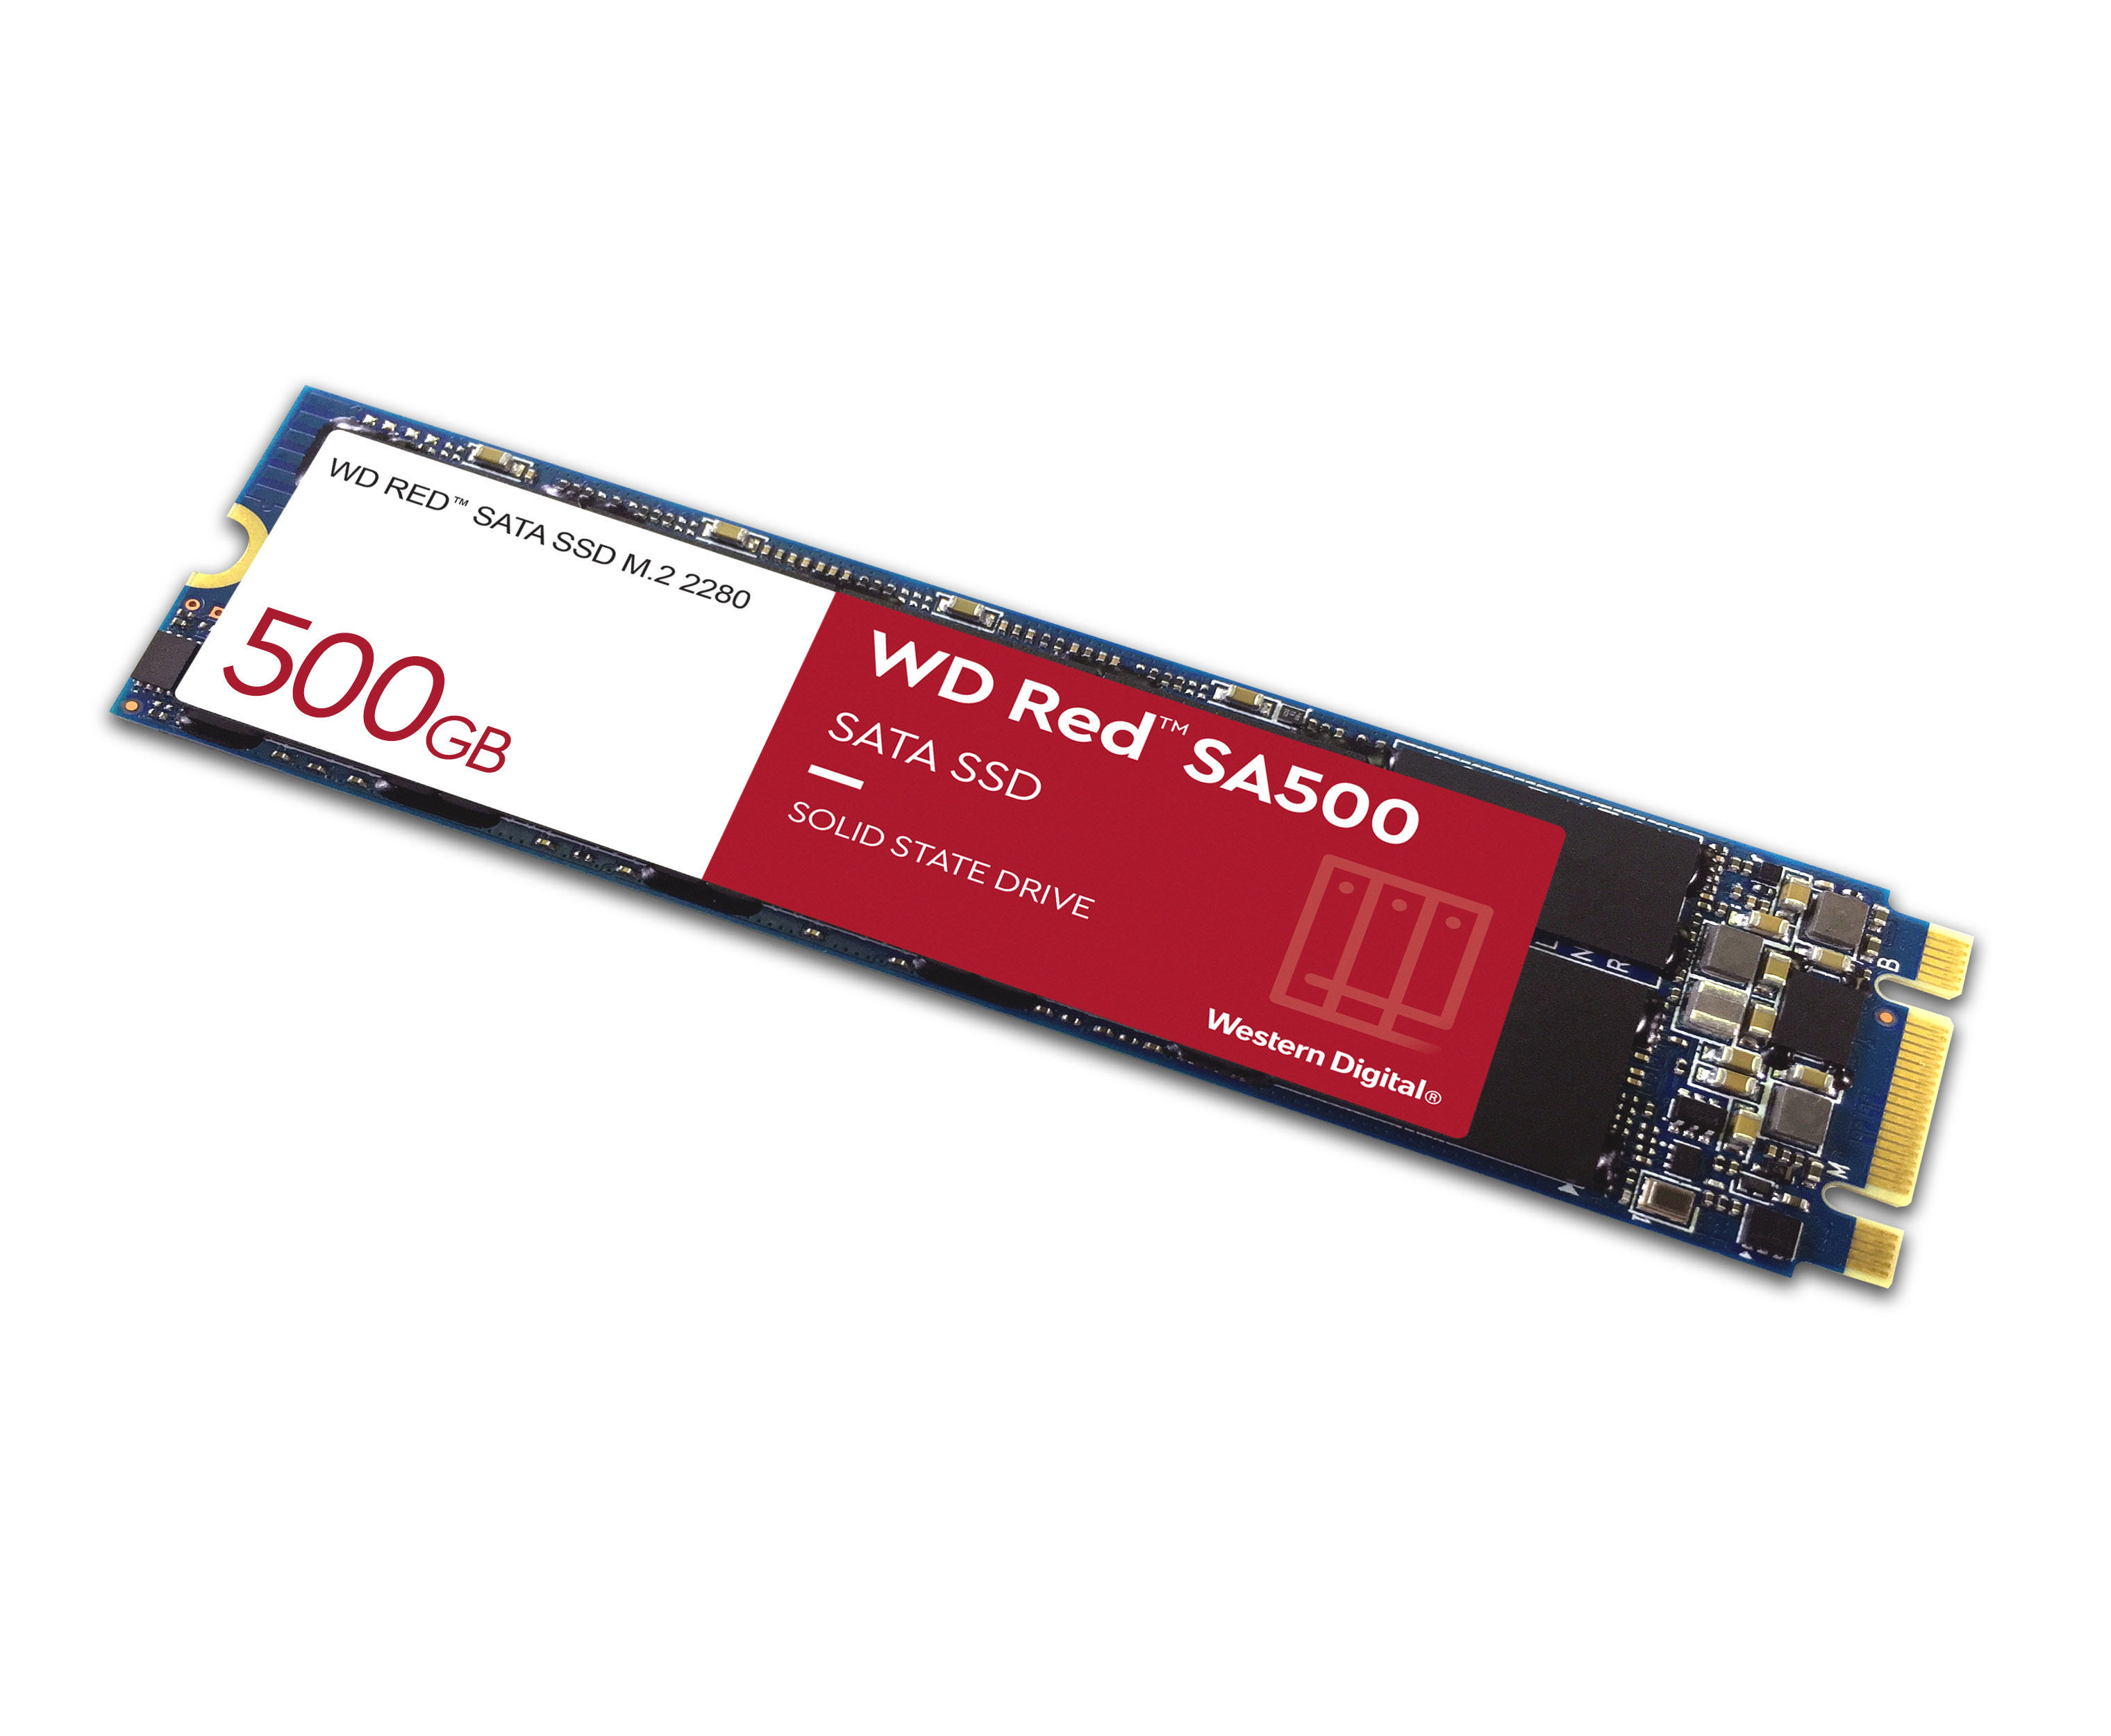 intern SATA, Red™ WD GB Retail, via M.2 SA500 Speicher SSD 500